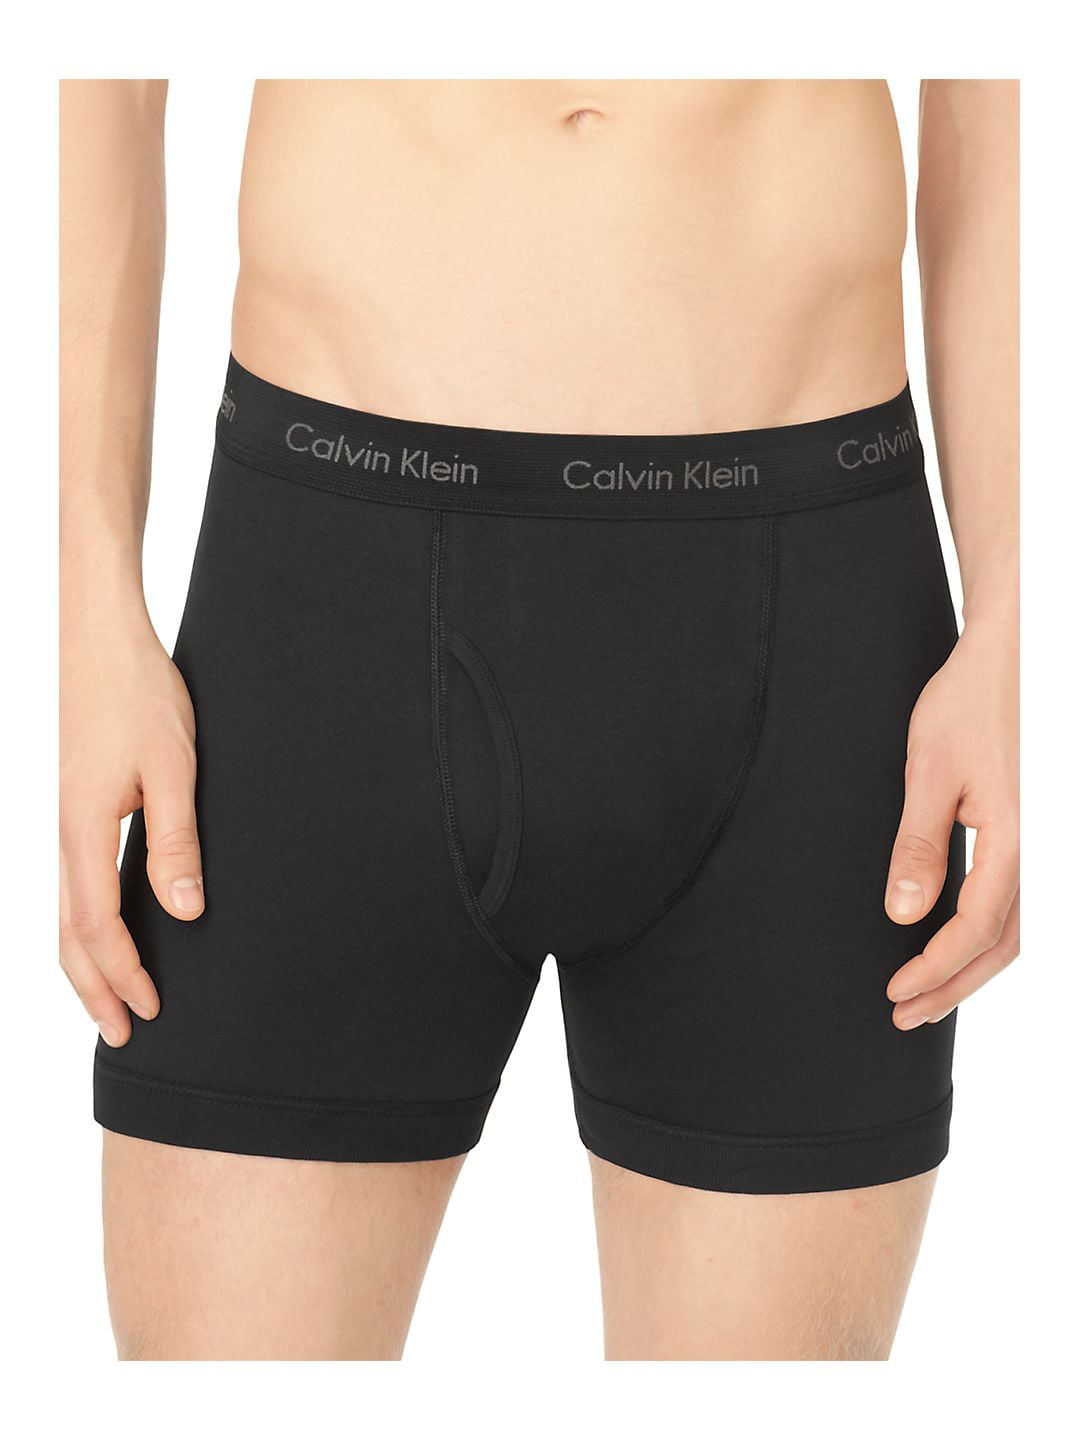 Men's Calvin Klein, All Cotton Boxer Brief 3-Pack